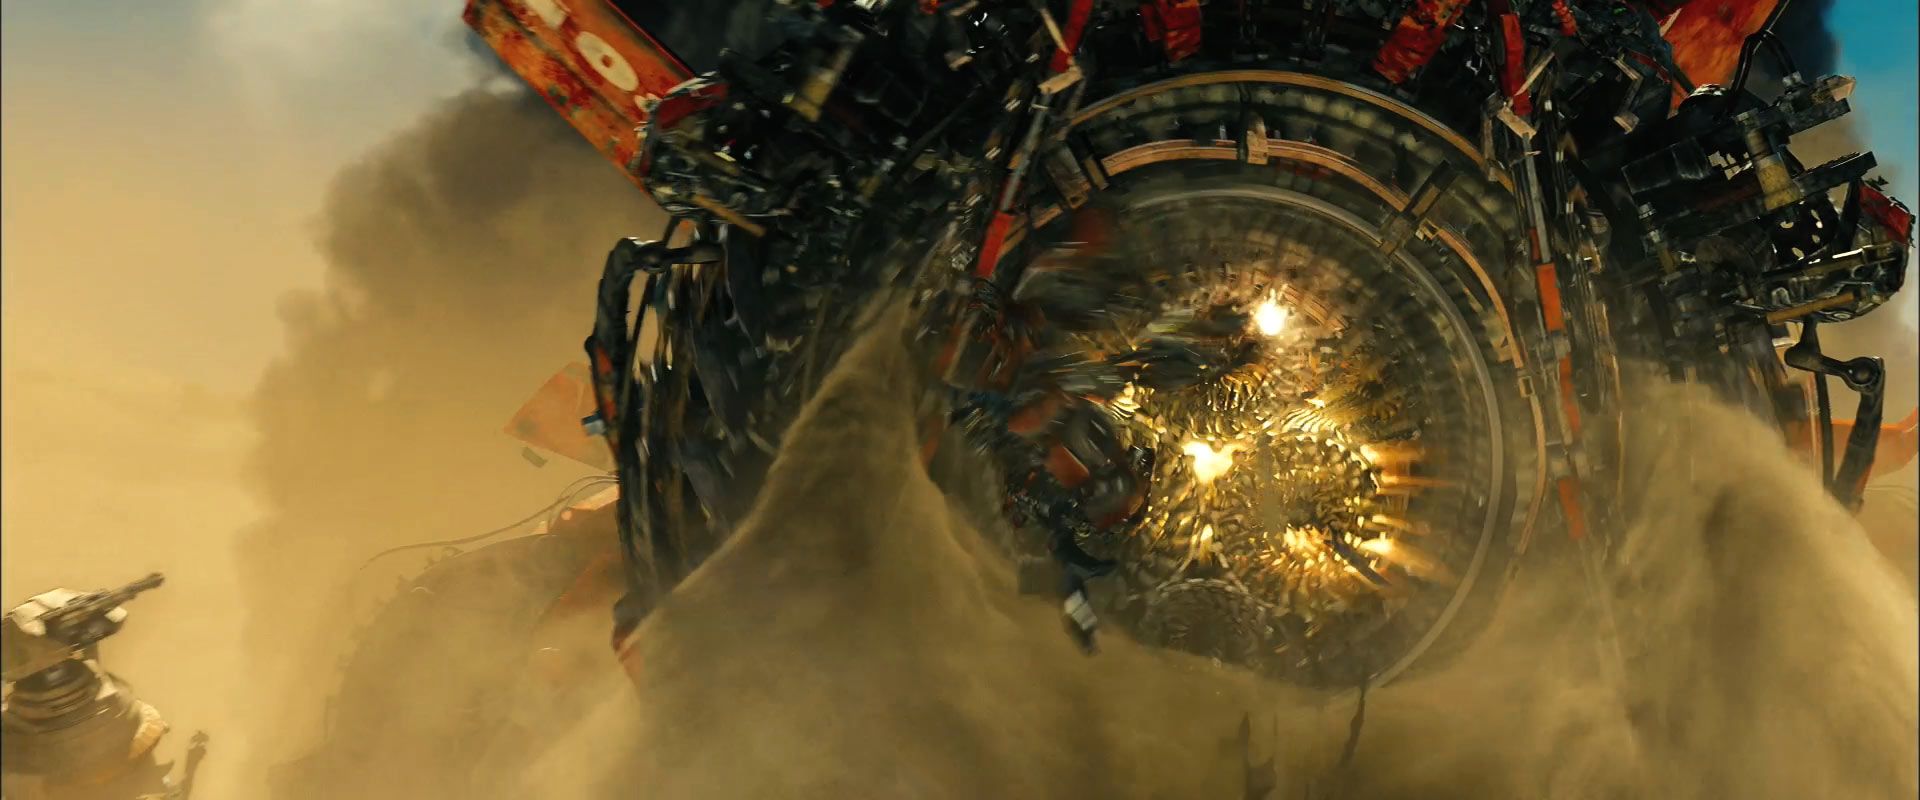 Transformers 2 Trailer Photo #1